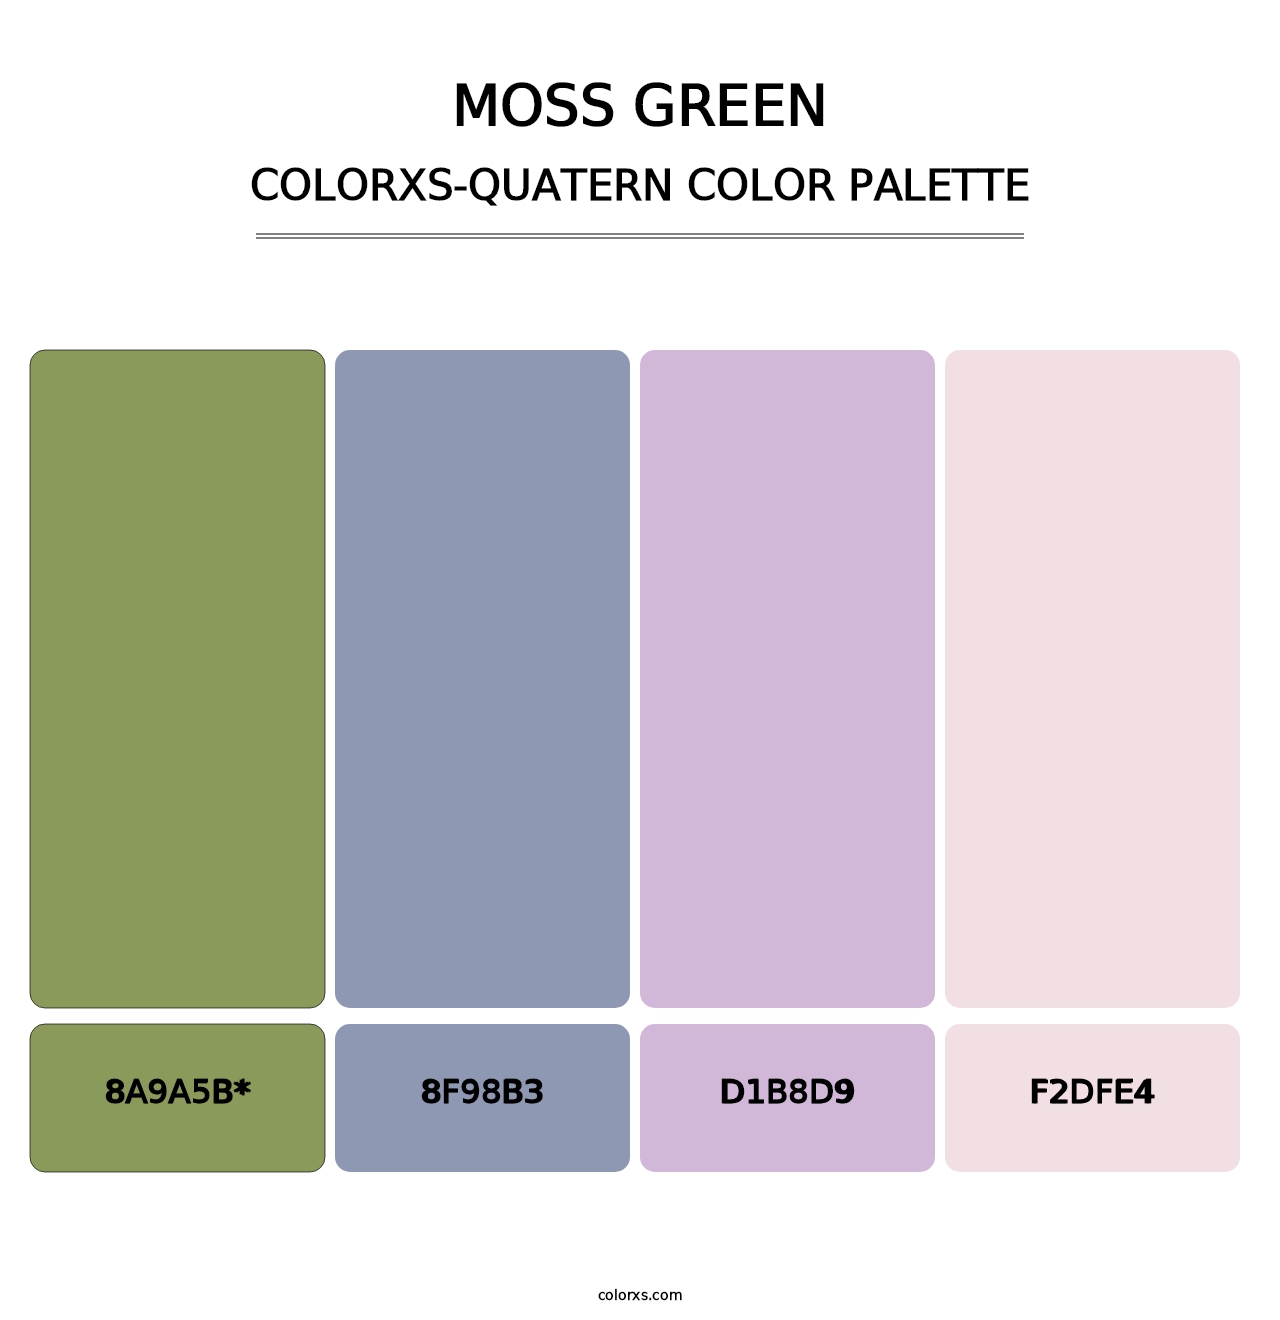 Moss Green - Colorxs Quatern Palette